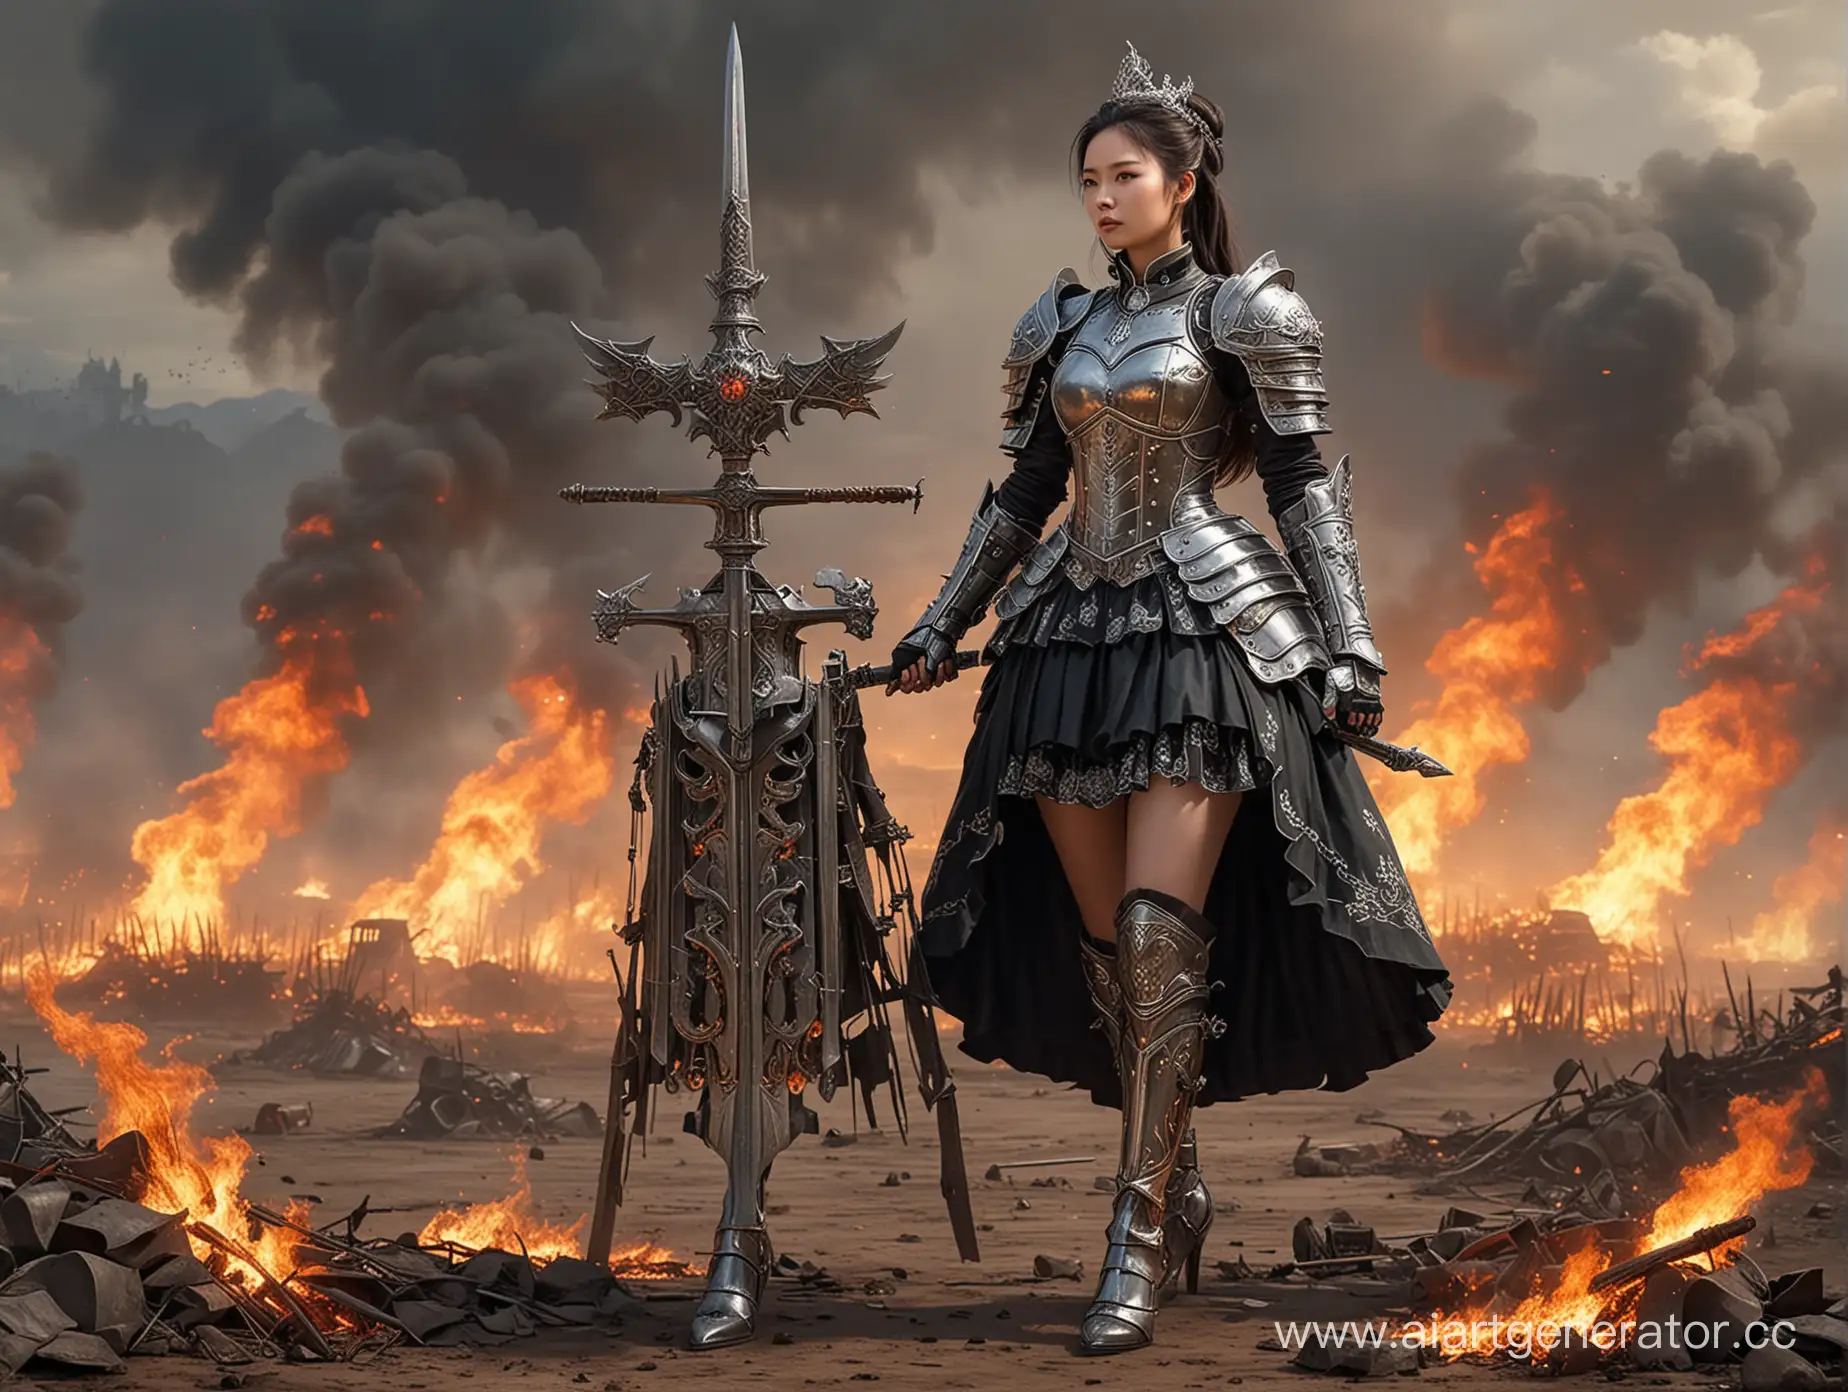 Warrior-Woman-Miao-Ying-in-Steel-Armor-on-Flaming-Battlefield